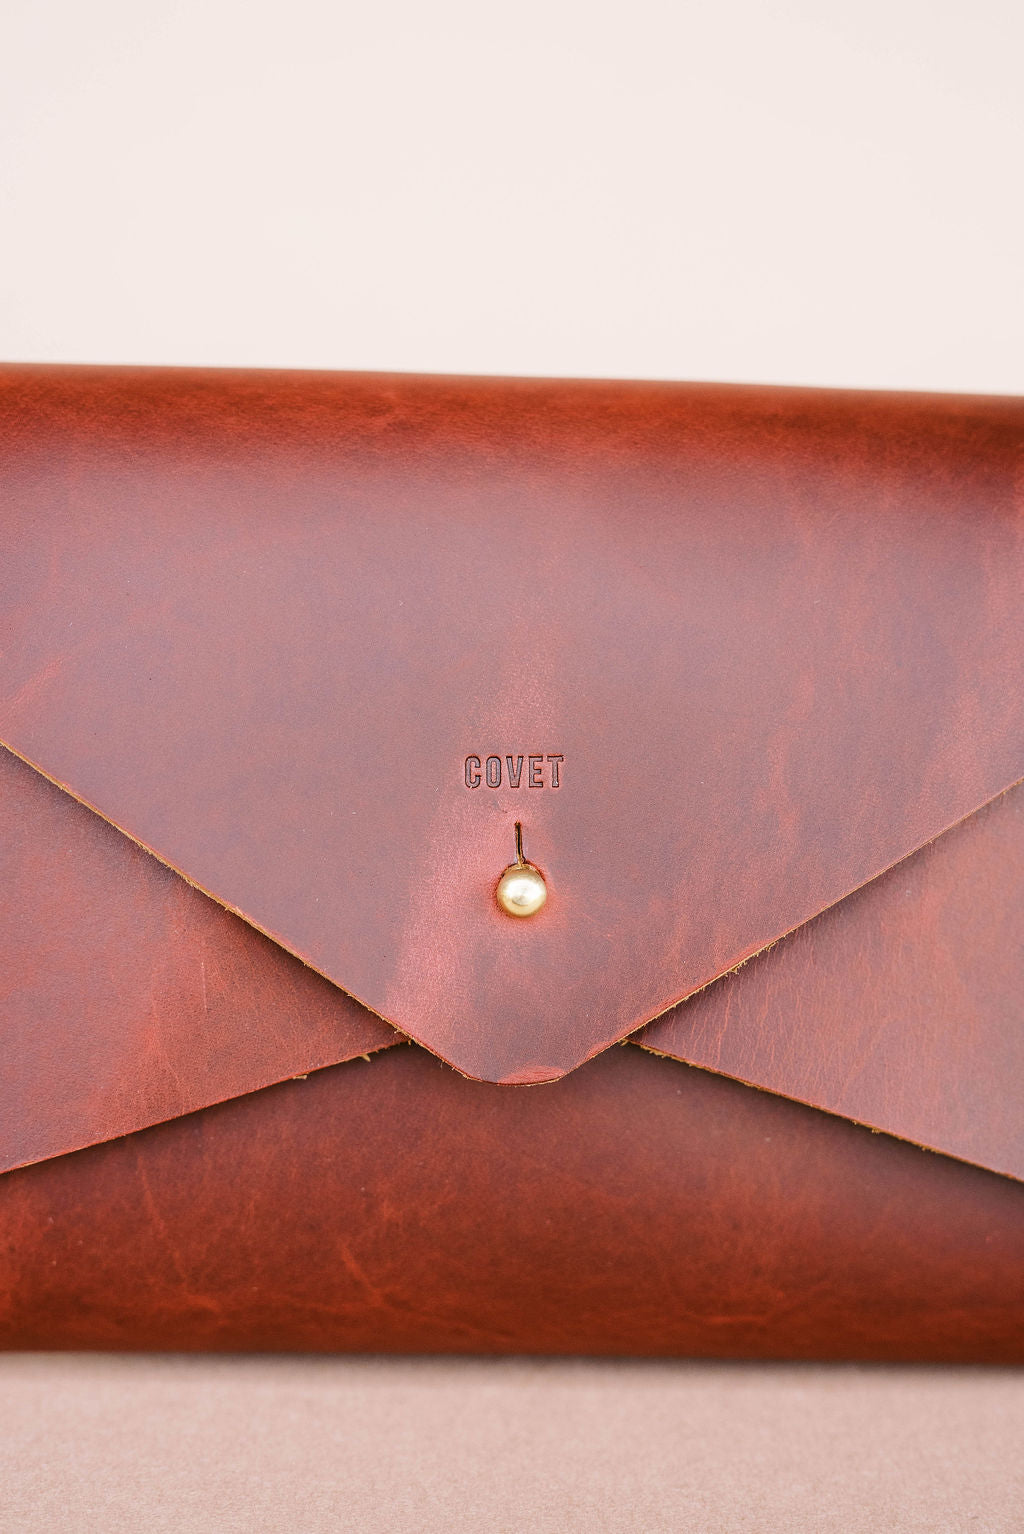 Envelope clutch